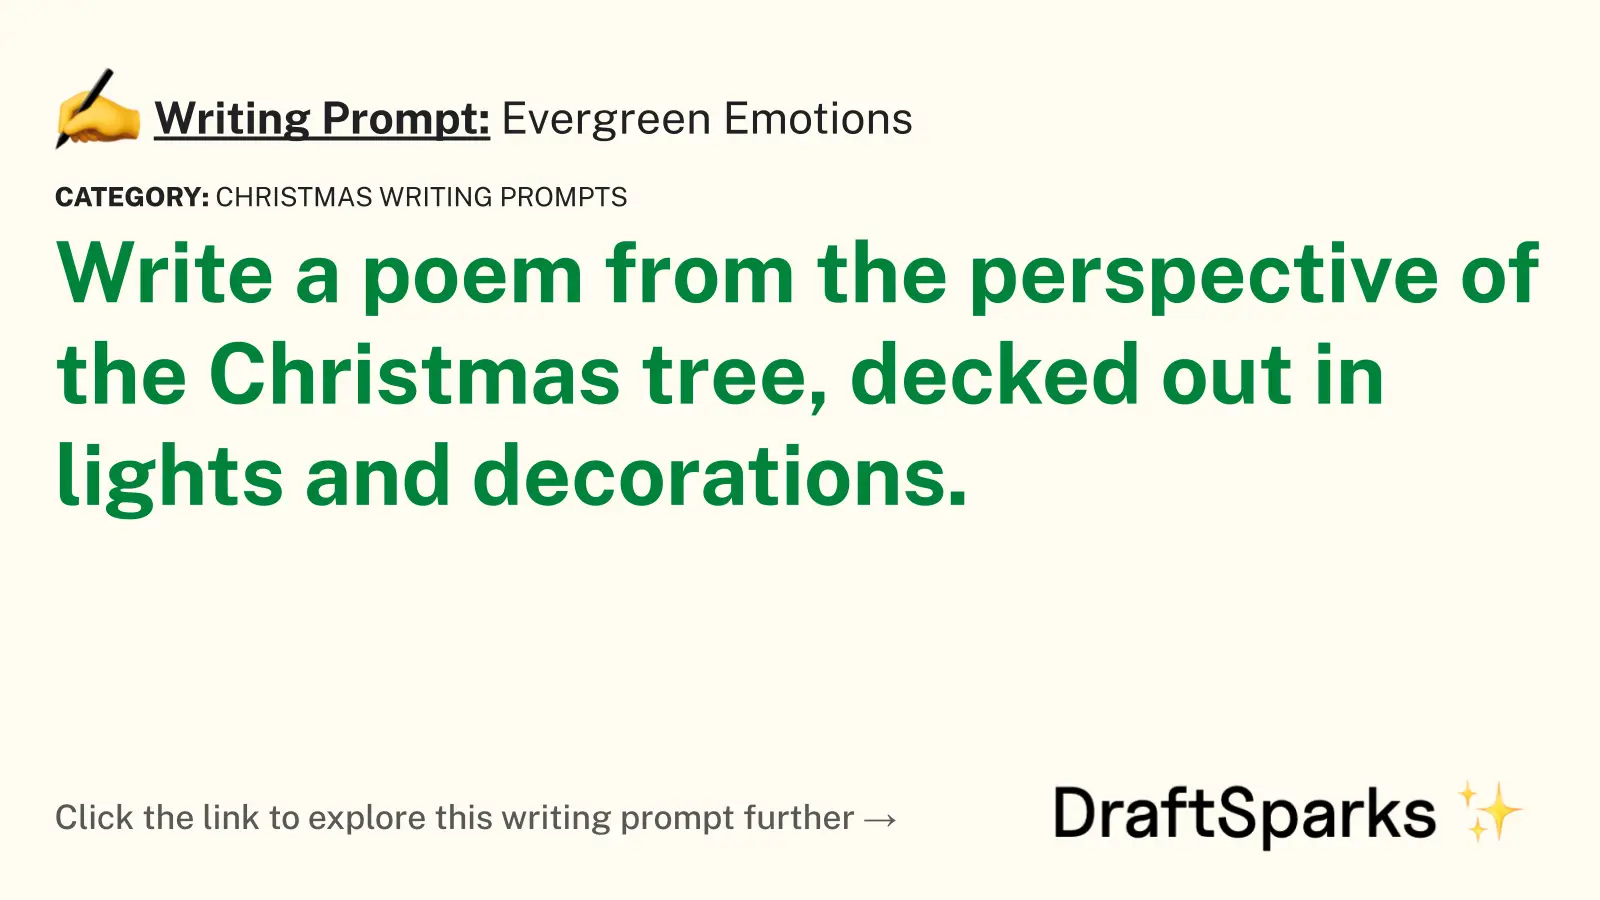 Evergreen Emotions